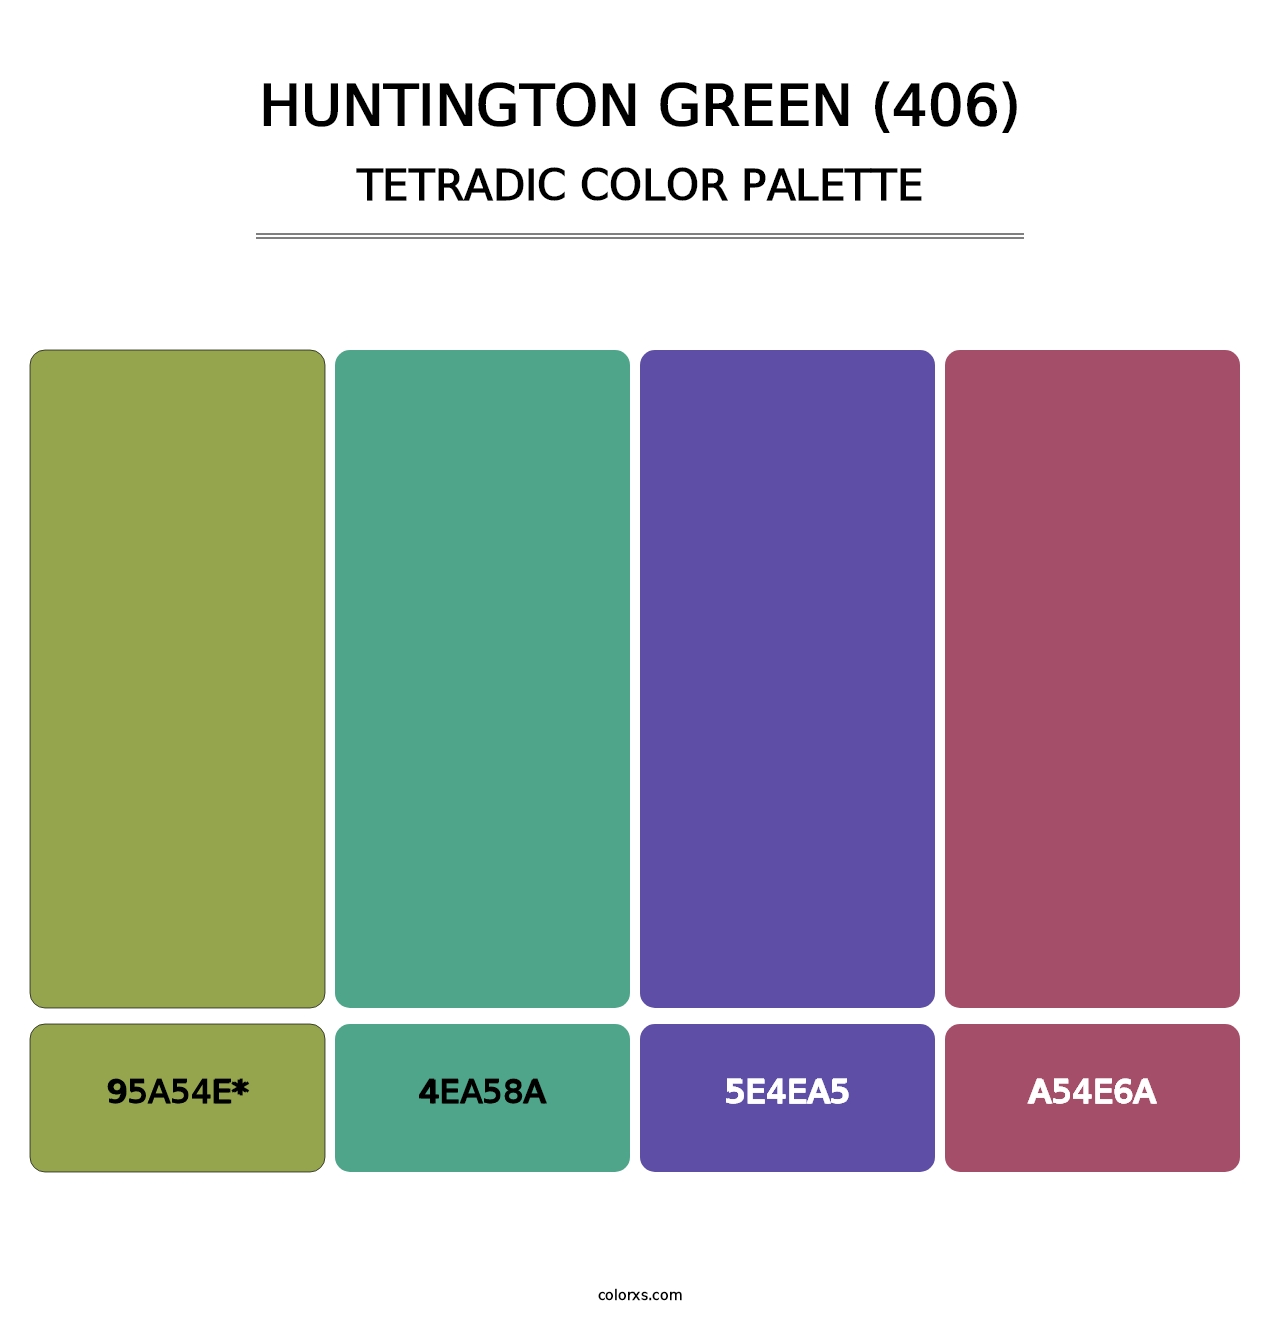 Huntington Green (406) - Tetradic Color Palette